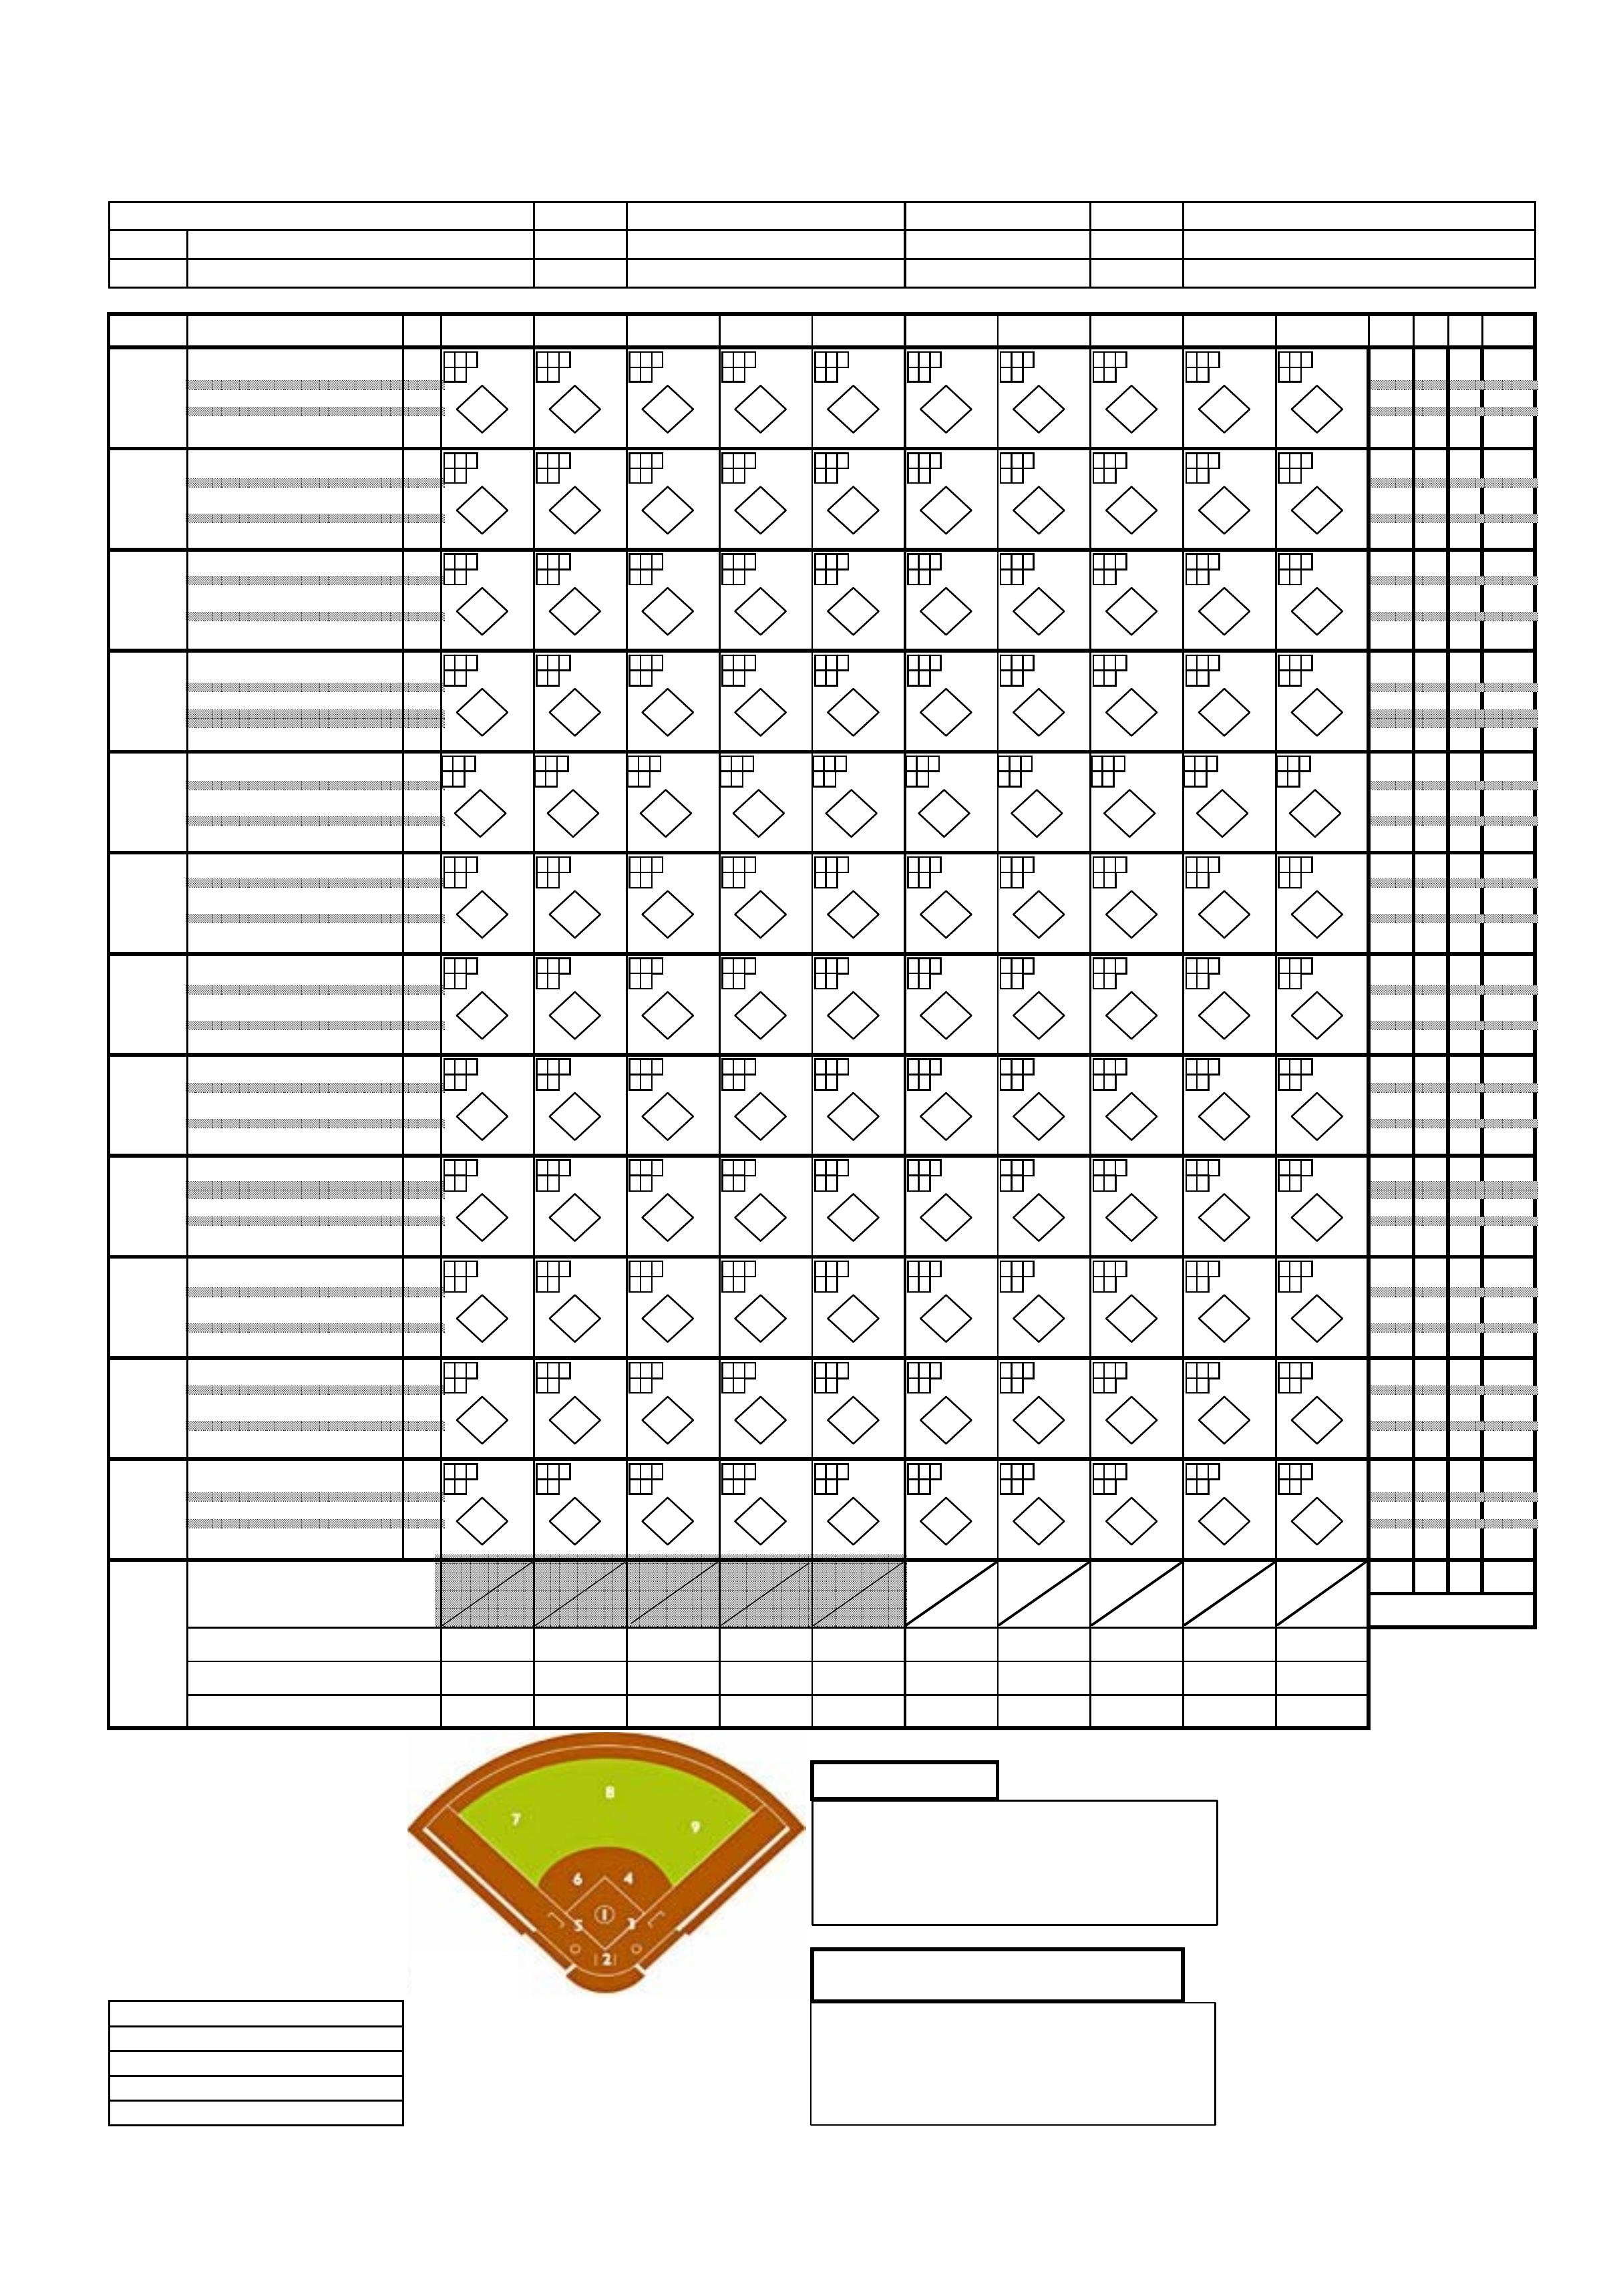 Softball Score Sheet Example Free Download - Free Printable Softball Stat Sheets